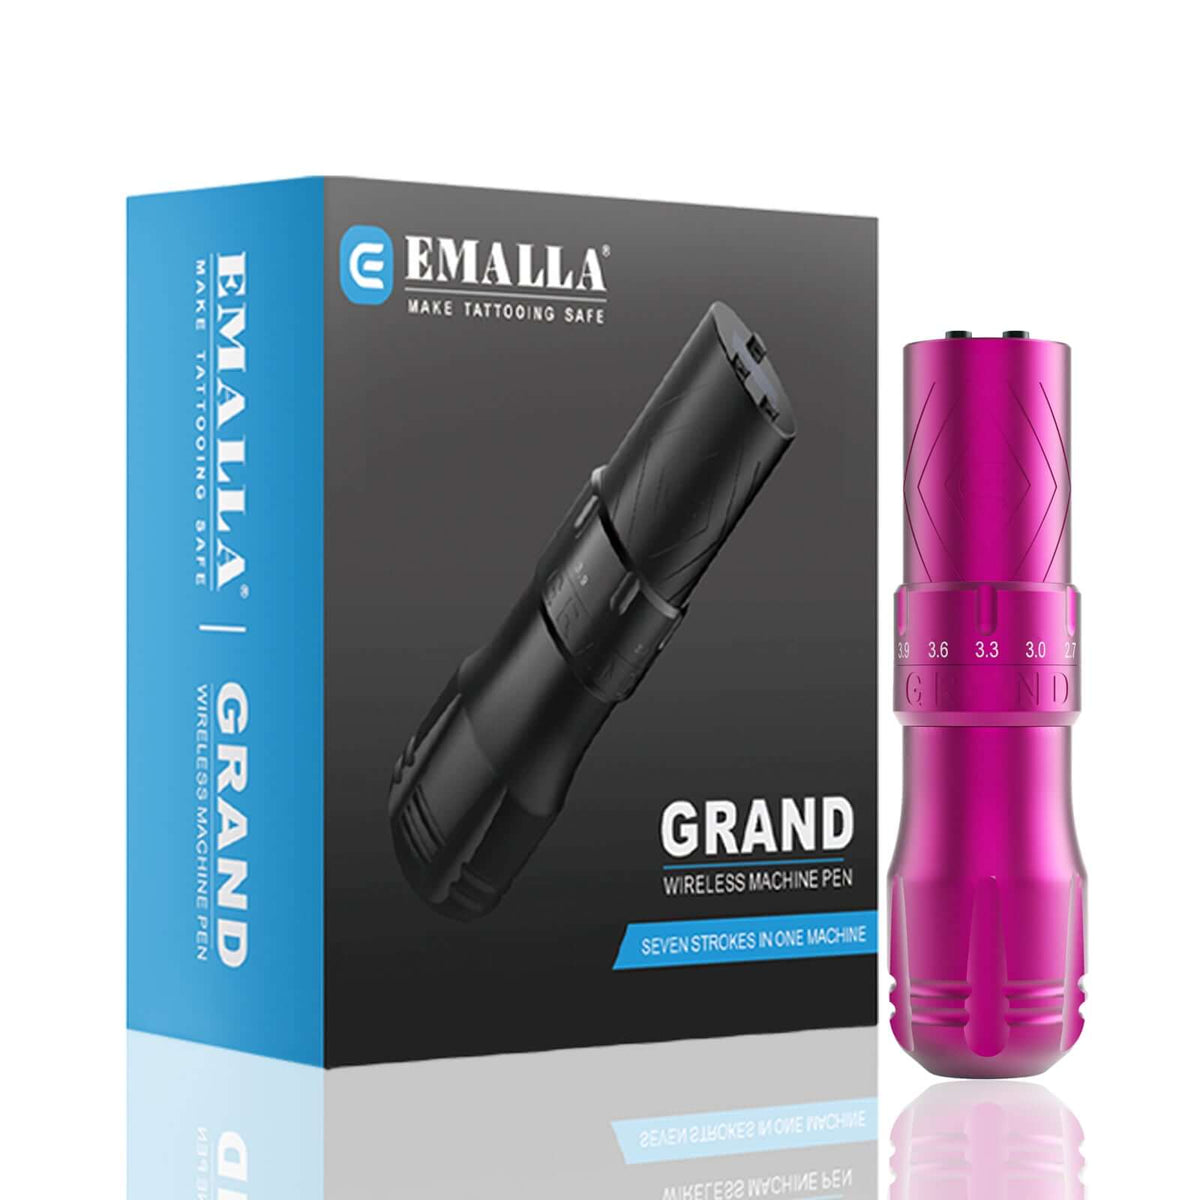 Package of EMALLA GRAND Wireless Tattoo Pen Machine (Pink)